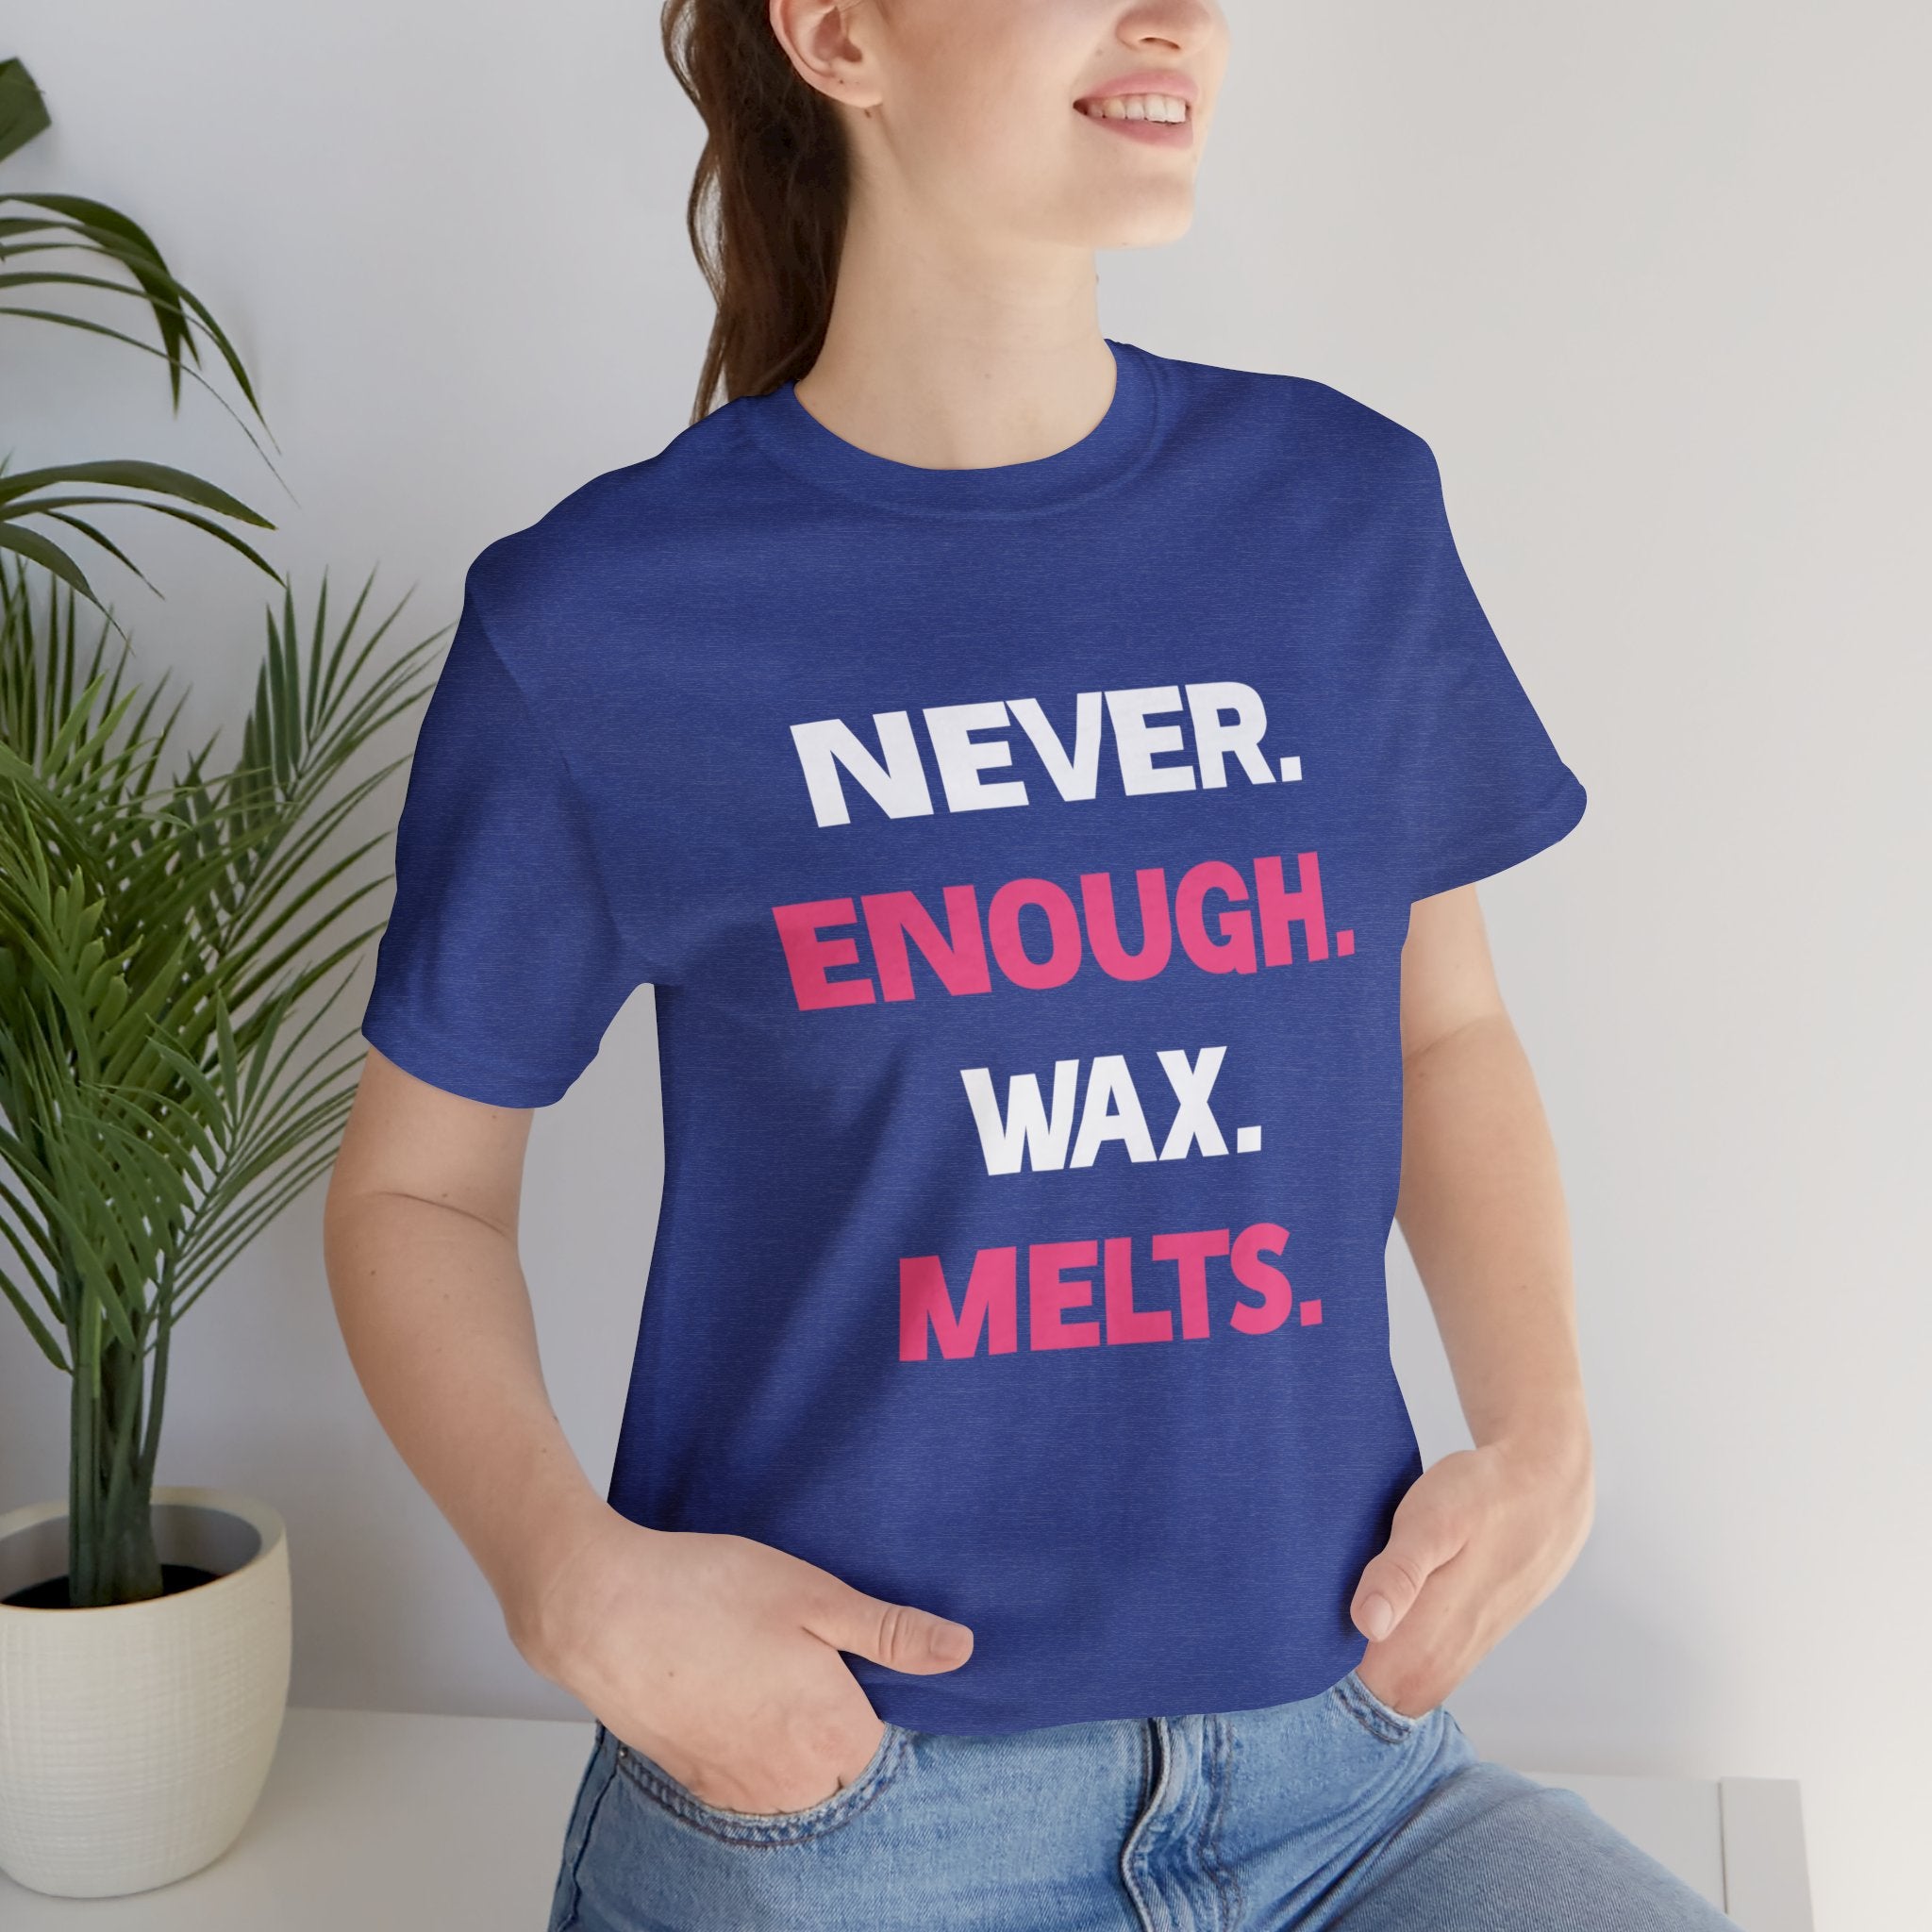 "Never. Enough. Wax. Melts." - Unisex Jersey Short Sleeve Tee